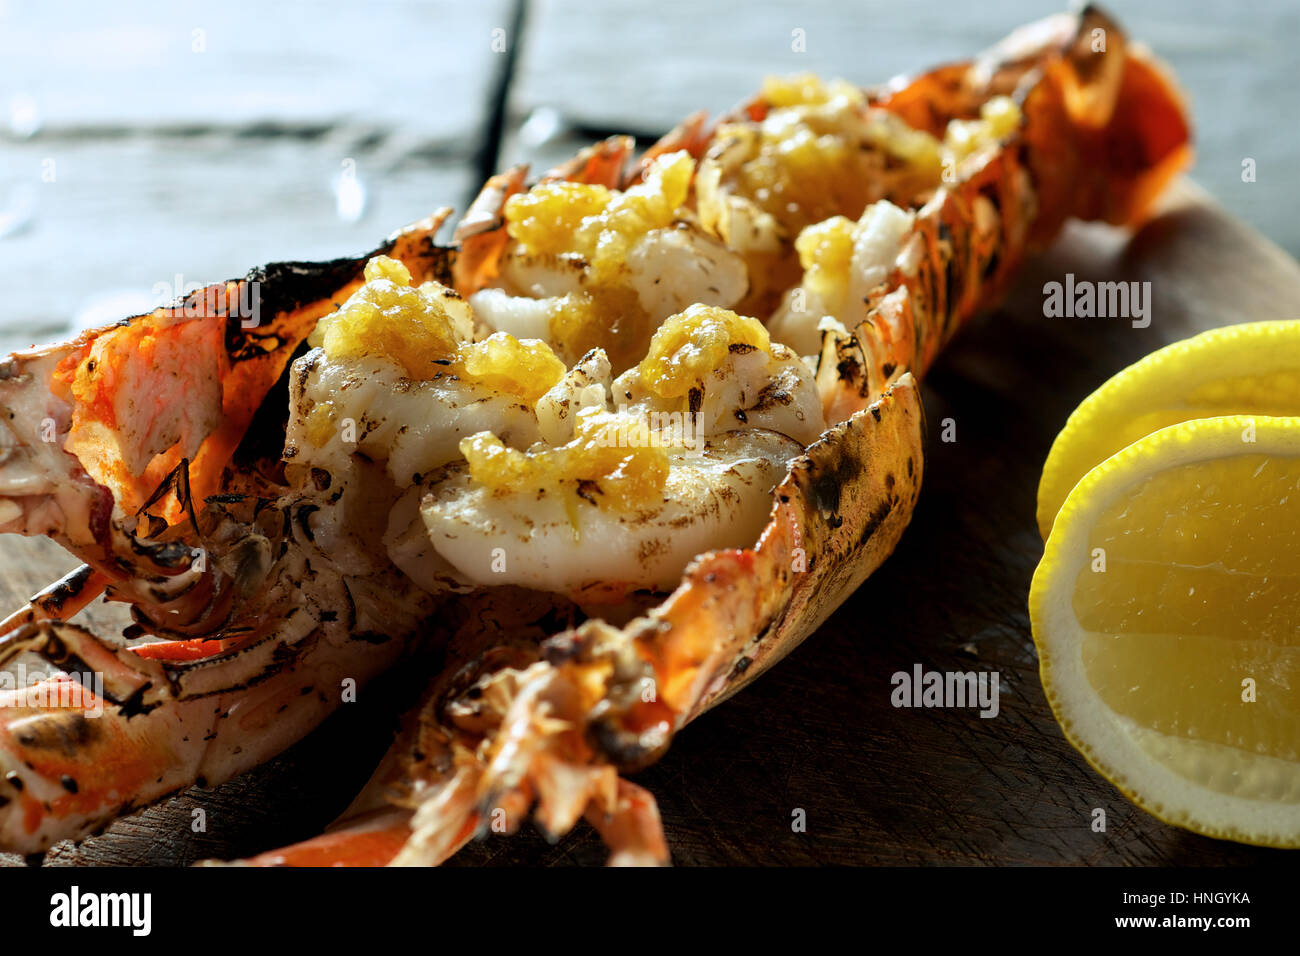 Lobster prawn dish also know as Irish langoustine (Nephrops norvegicus), Norway lobster, scampi or Dublin Bay prawn. Stock Photo